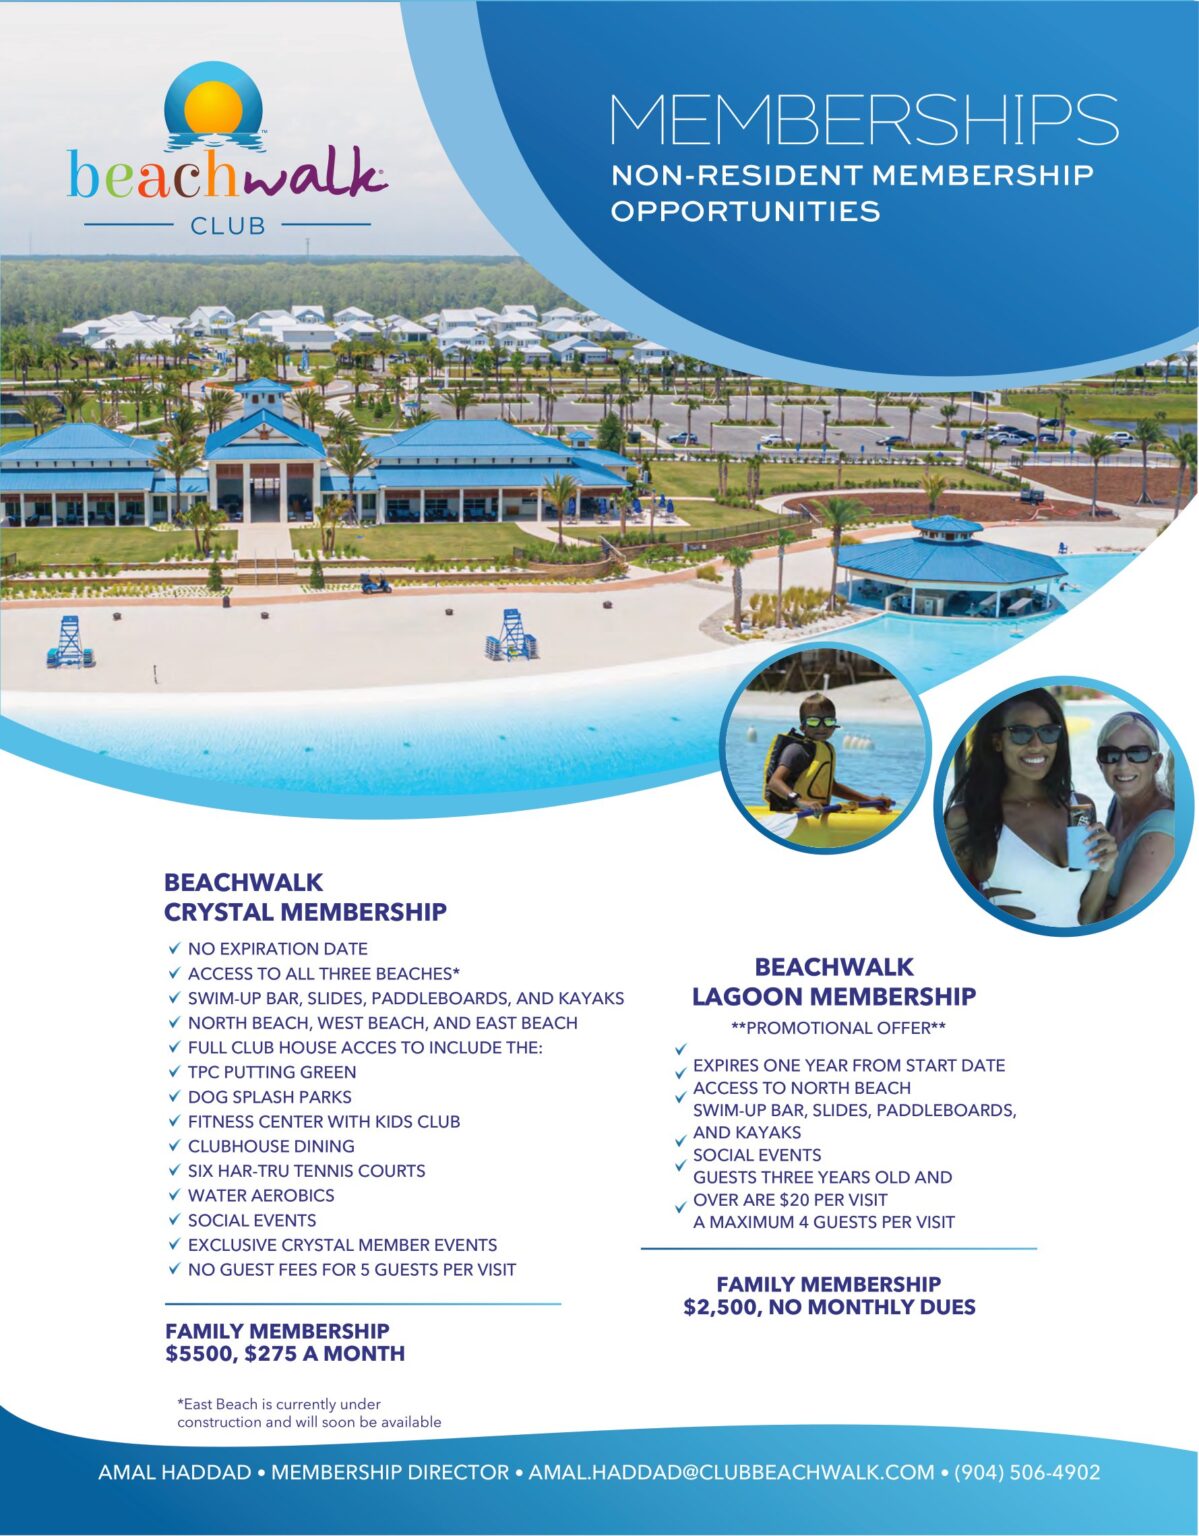 Beachwalk Membership flyer (PDF) 2.8MB